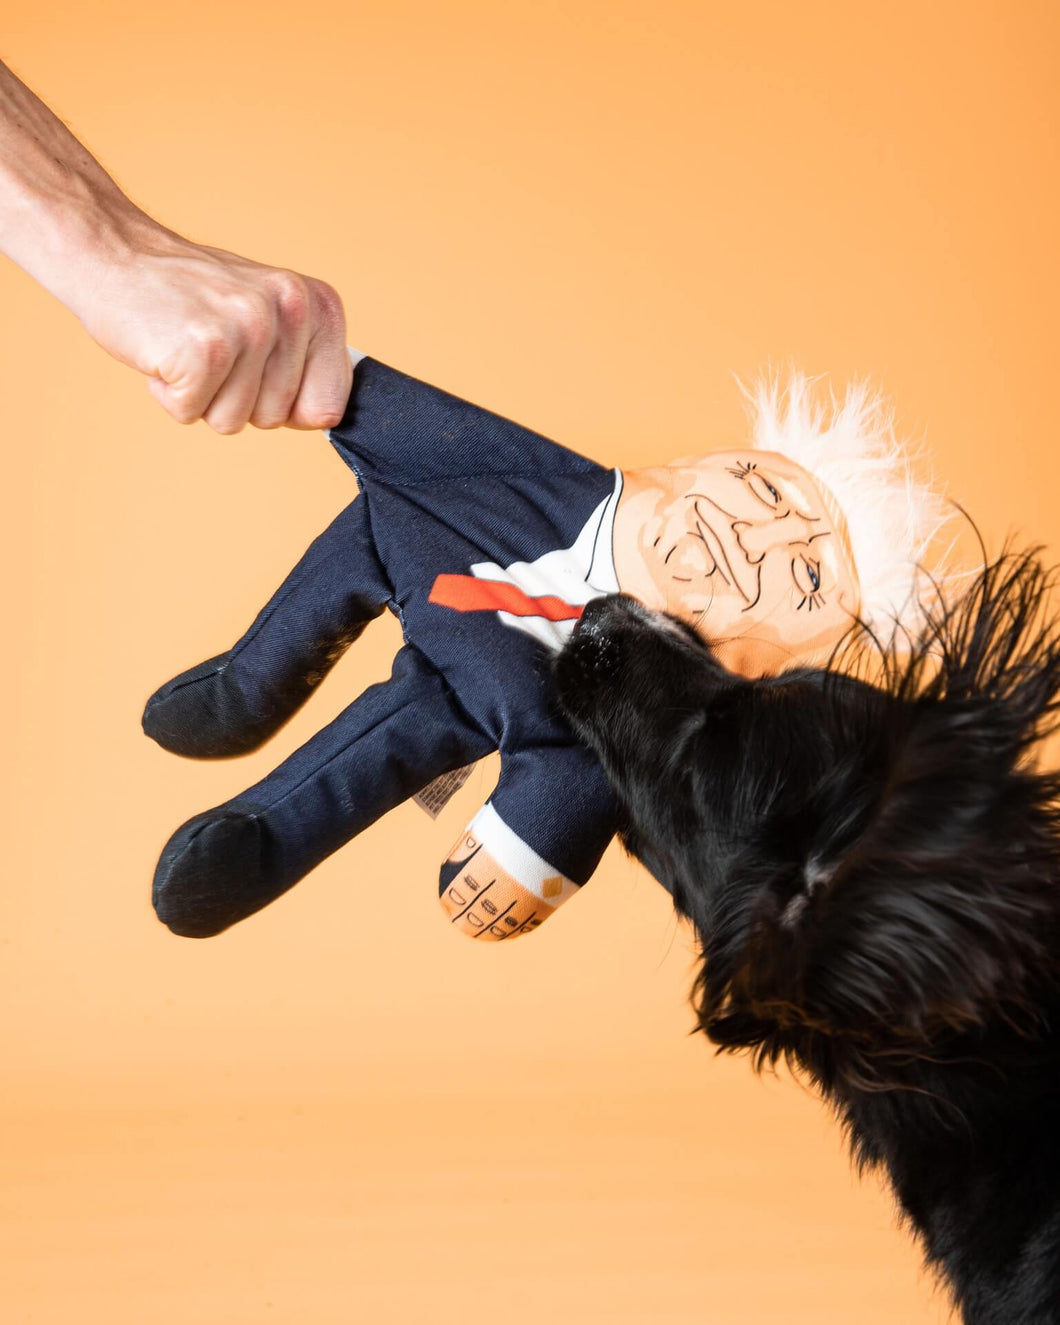 Donald Trump dog toy with black dog 